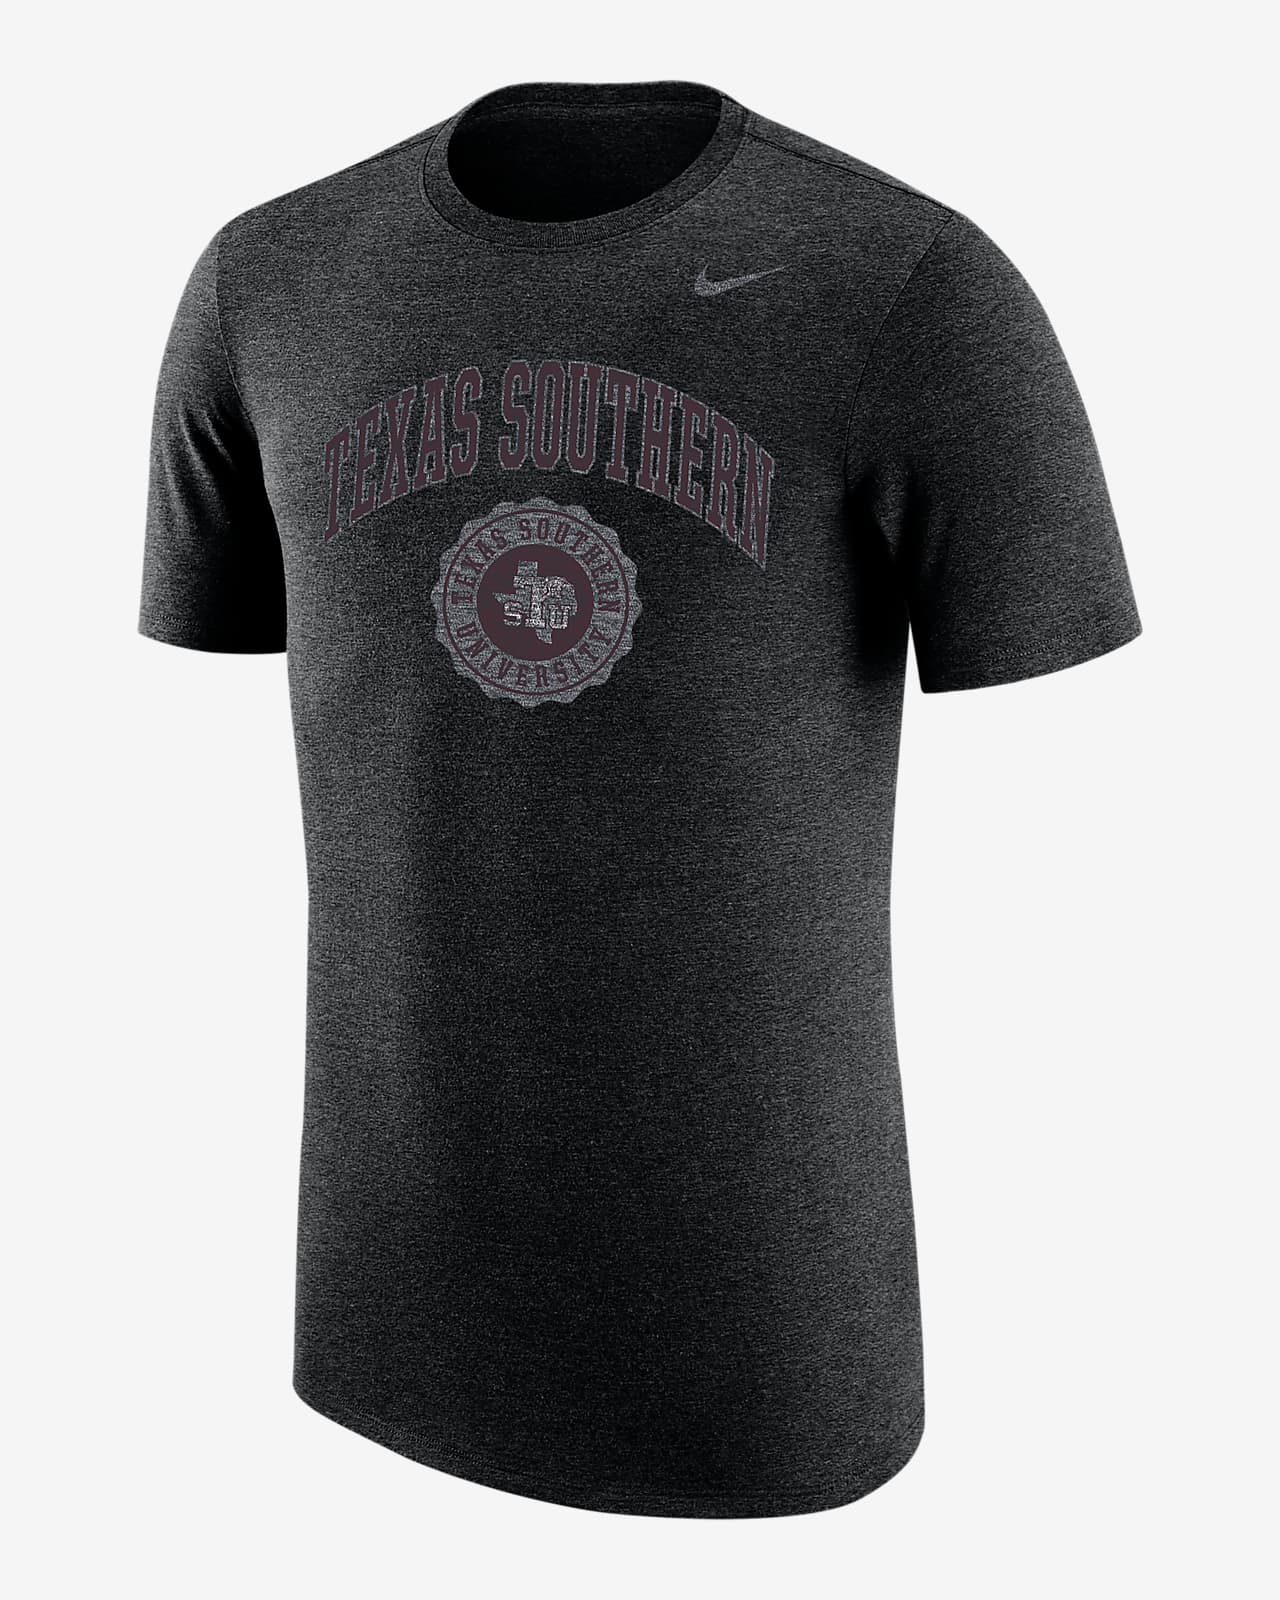 Nike College (Texas Southern) Men's T-Shirt